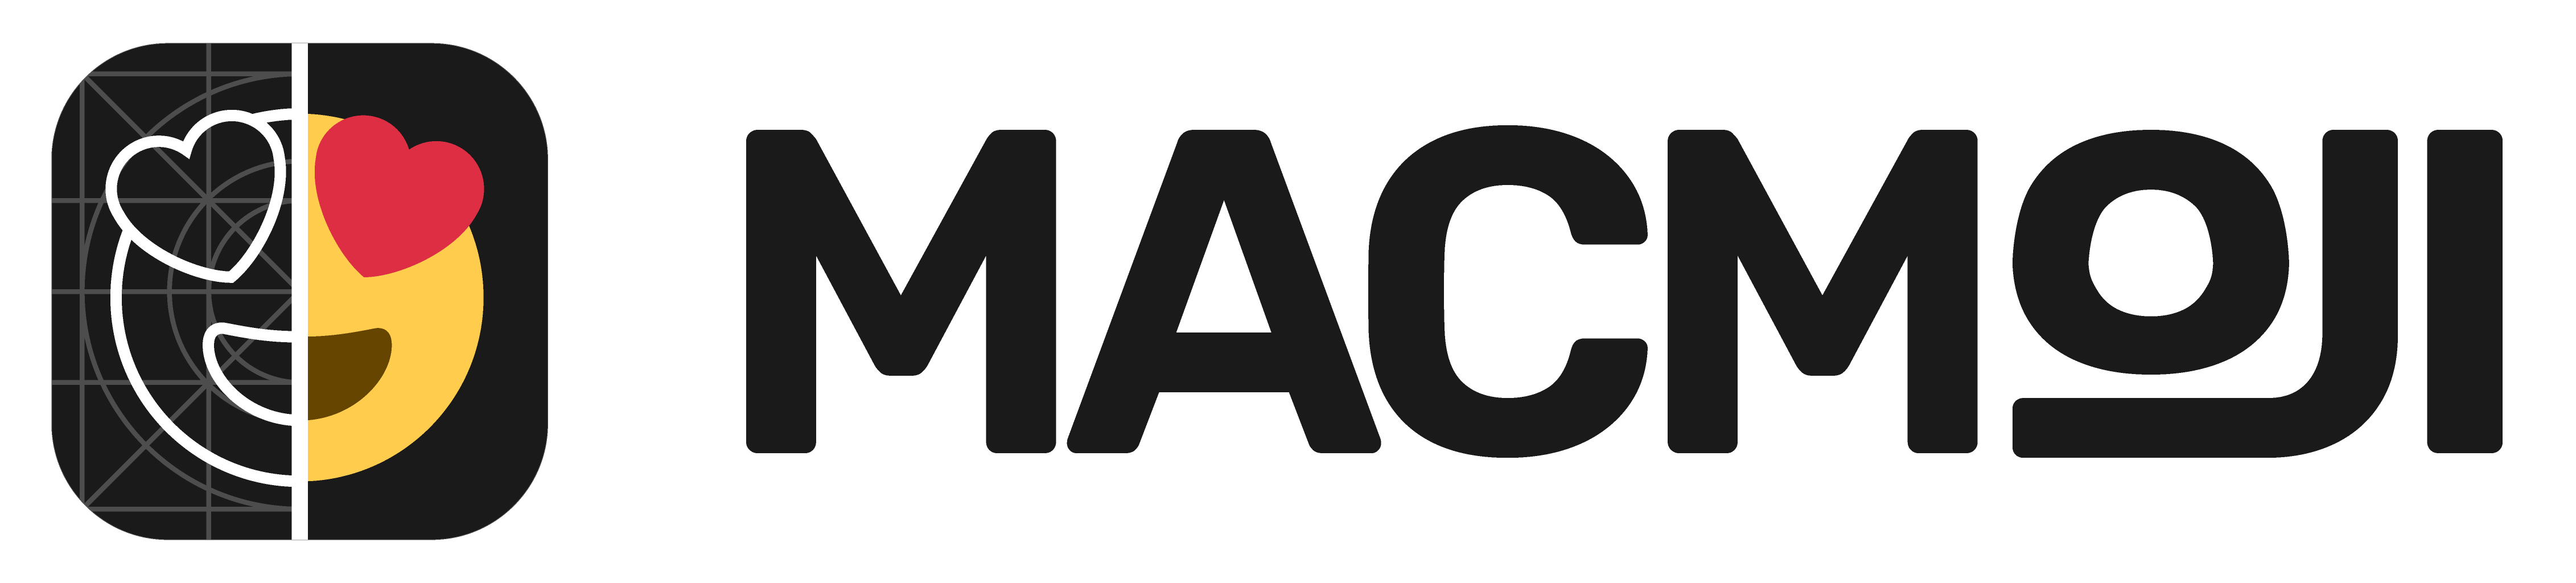 MacMoji logo